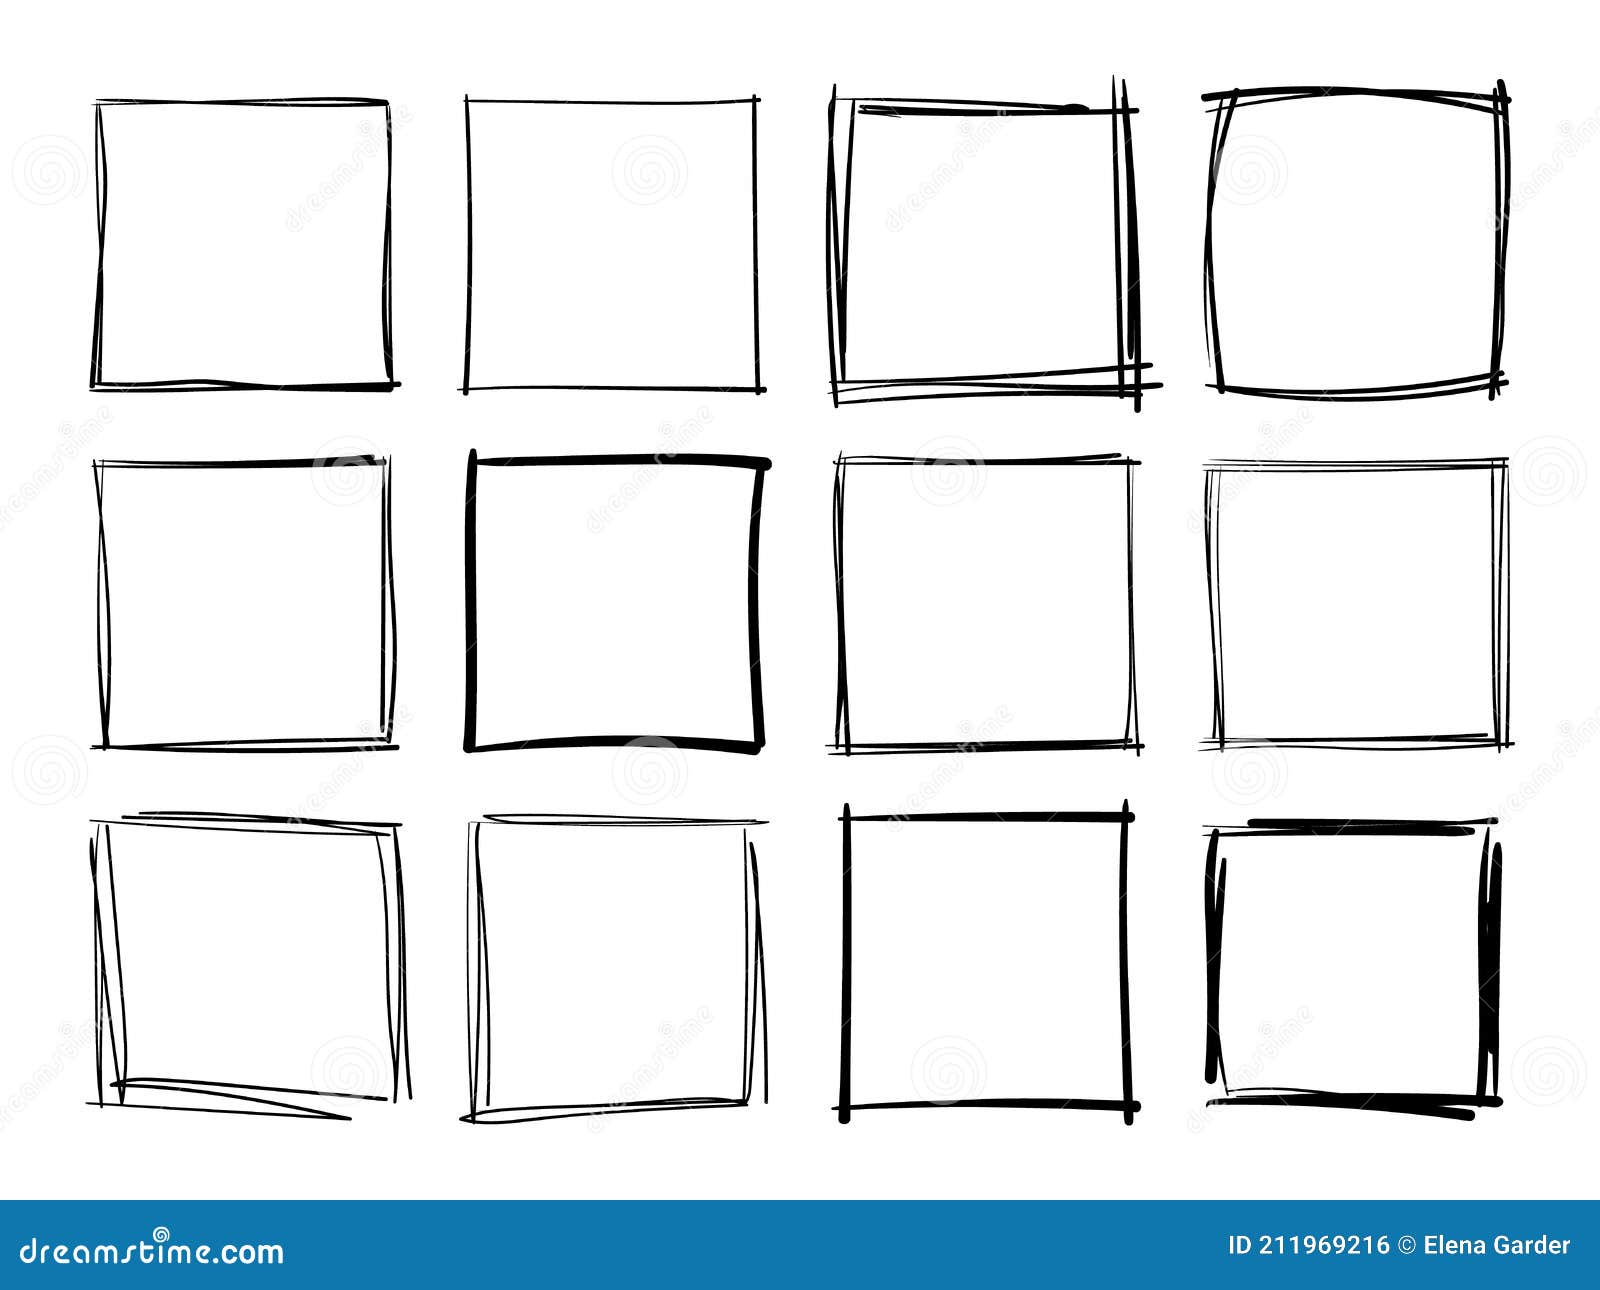 hand drawn frames. handdrawn square frame.  borders grunge template set.